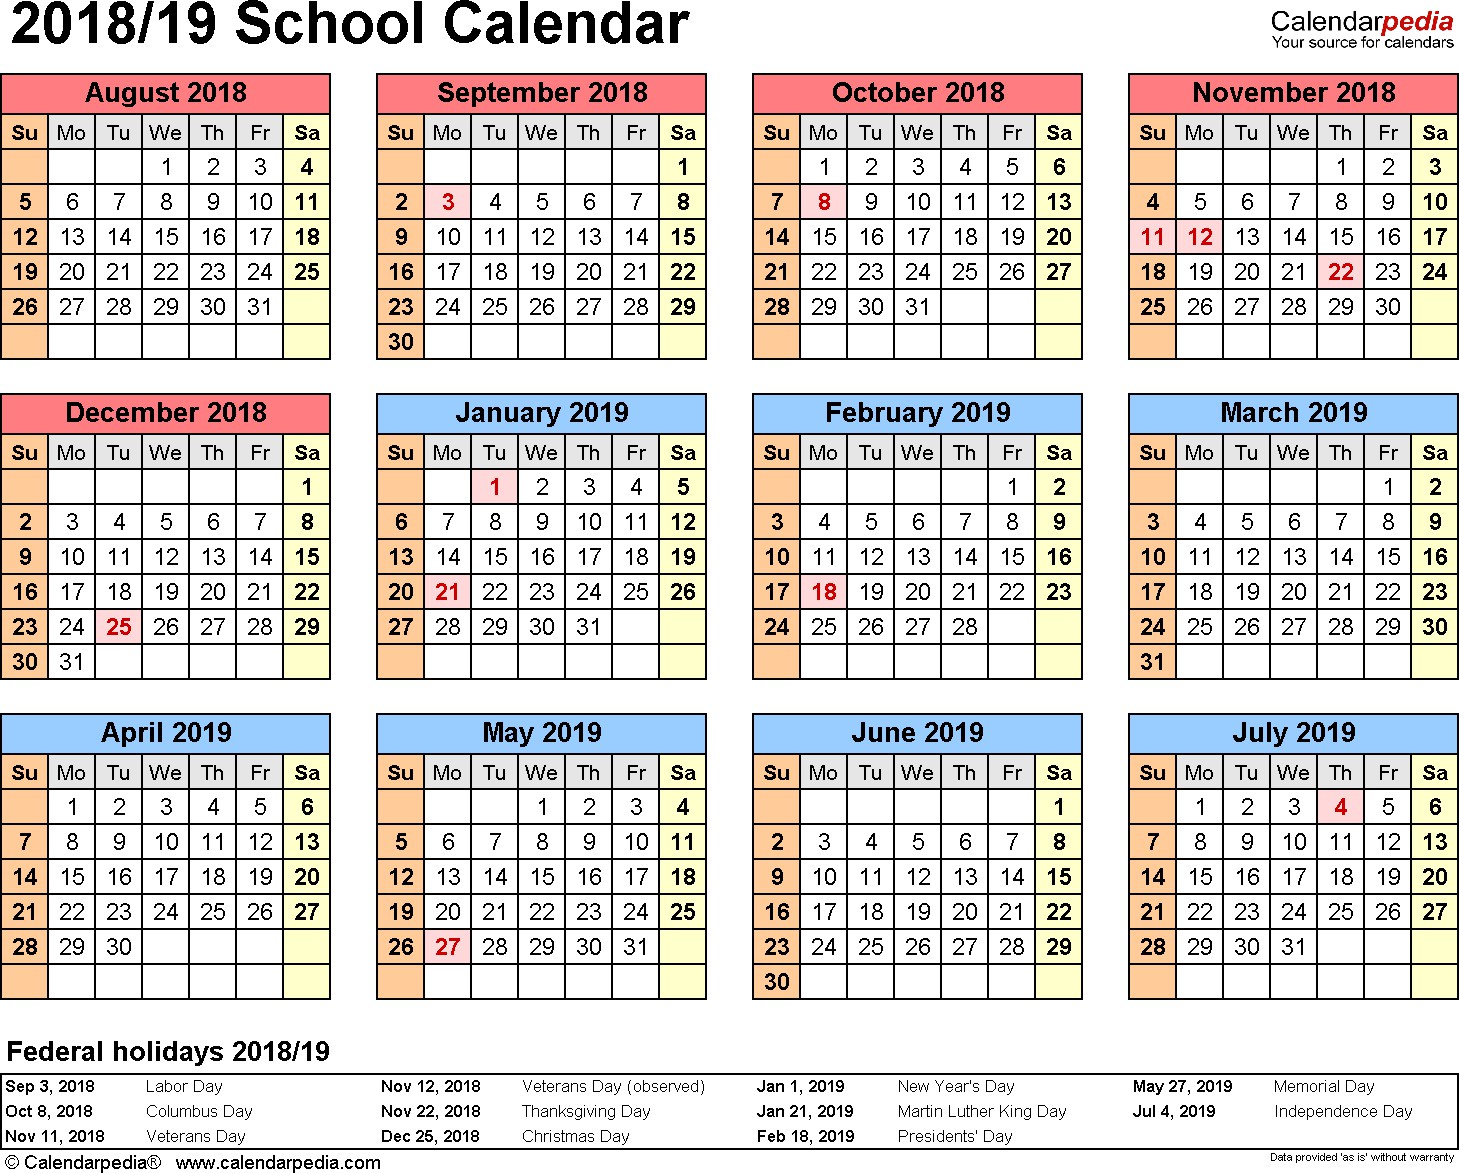 school calendars 2018 2019 as free printable word templates